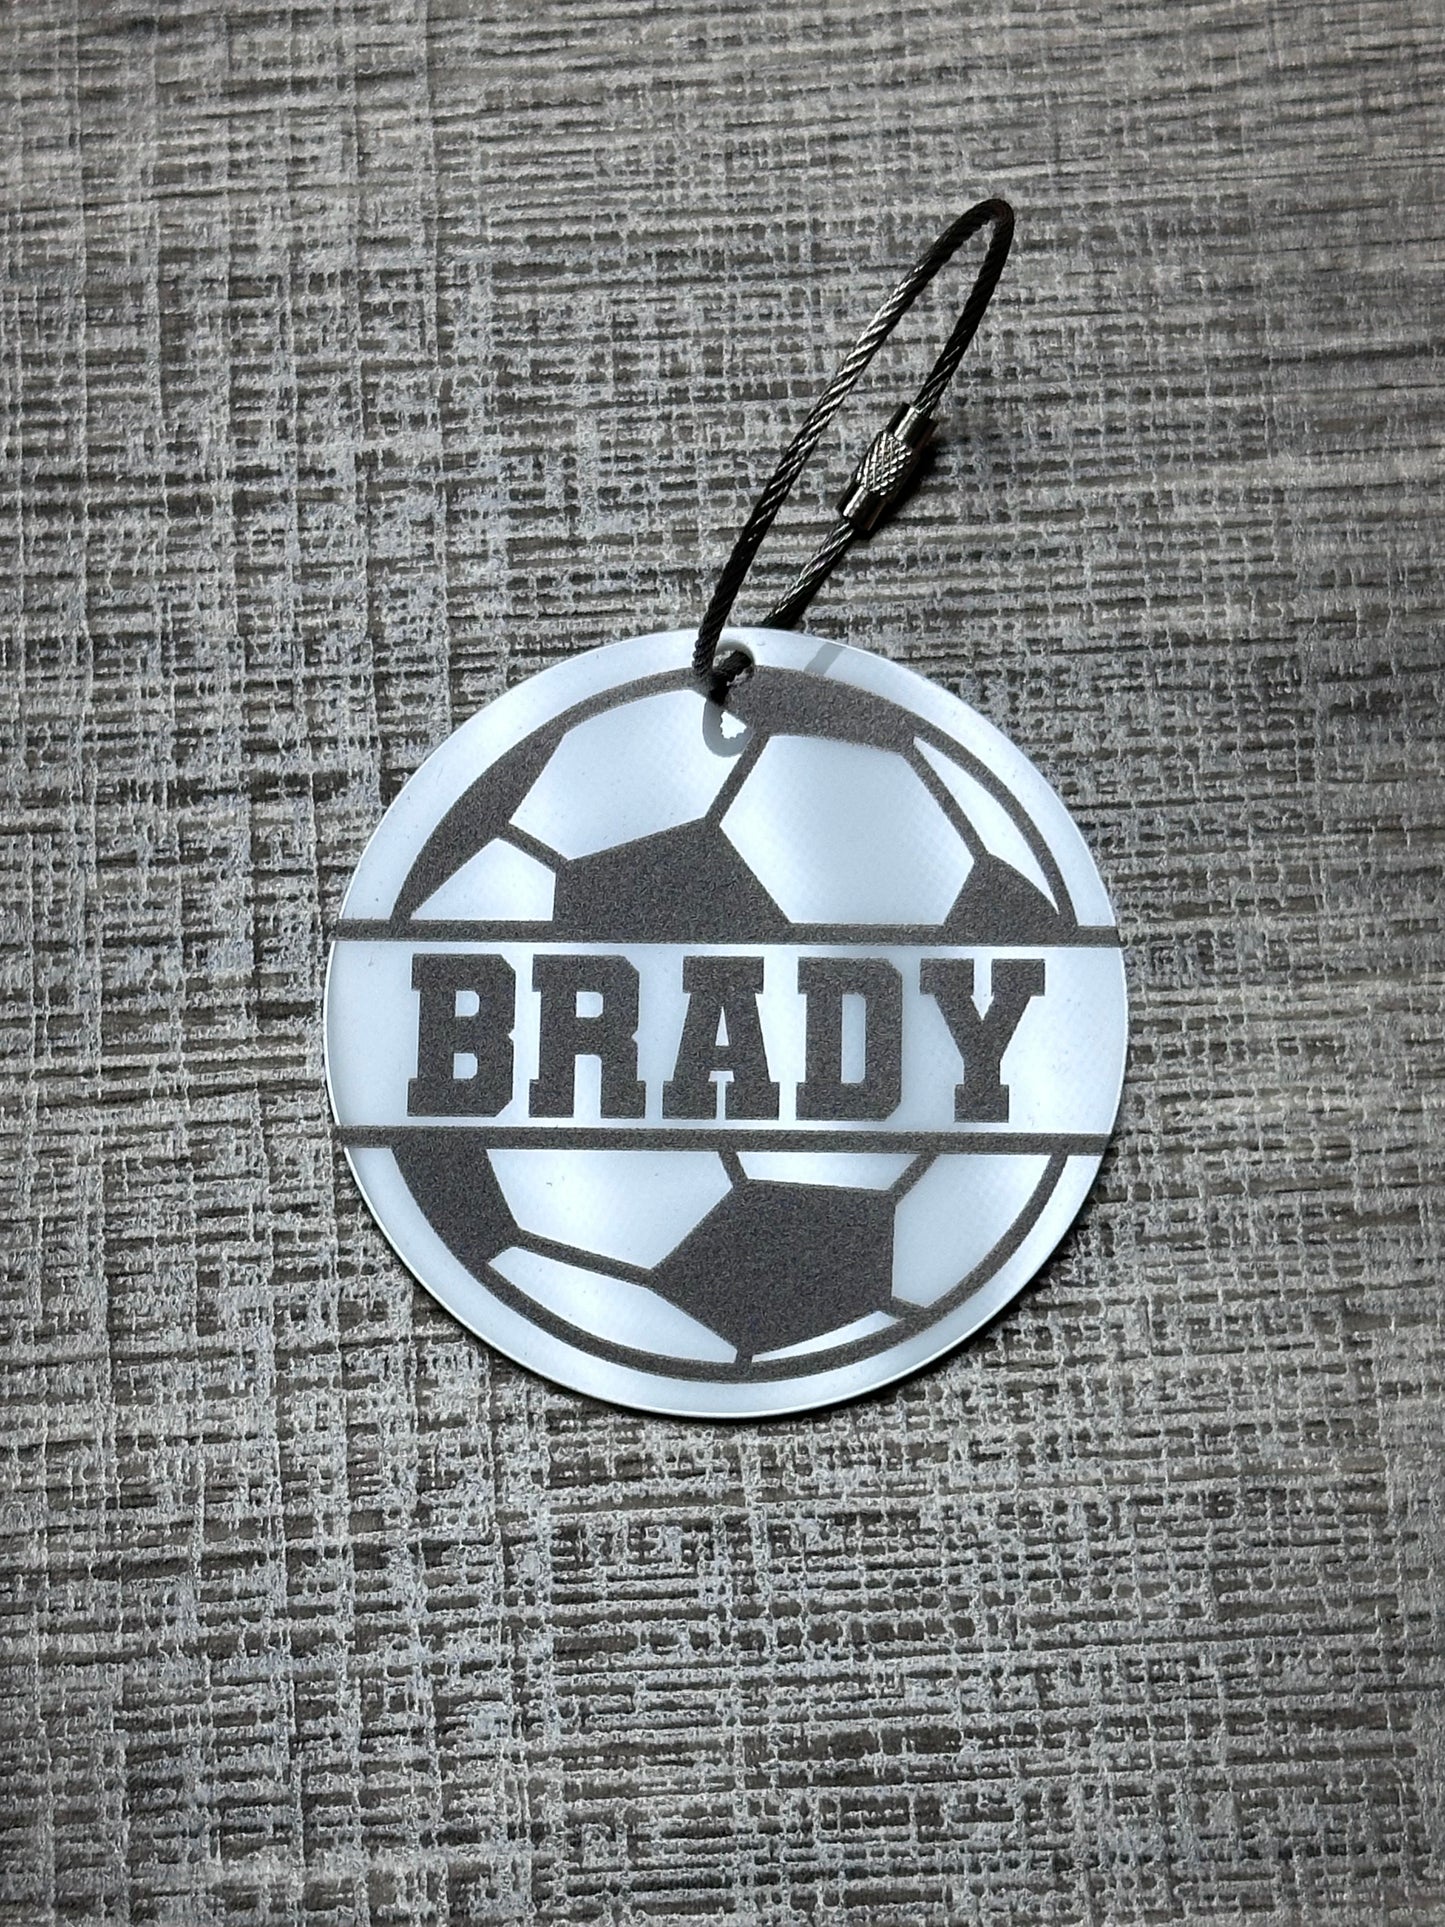 Soccer Bag Custom Tag, UV Printed - Professional Artwork